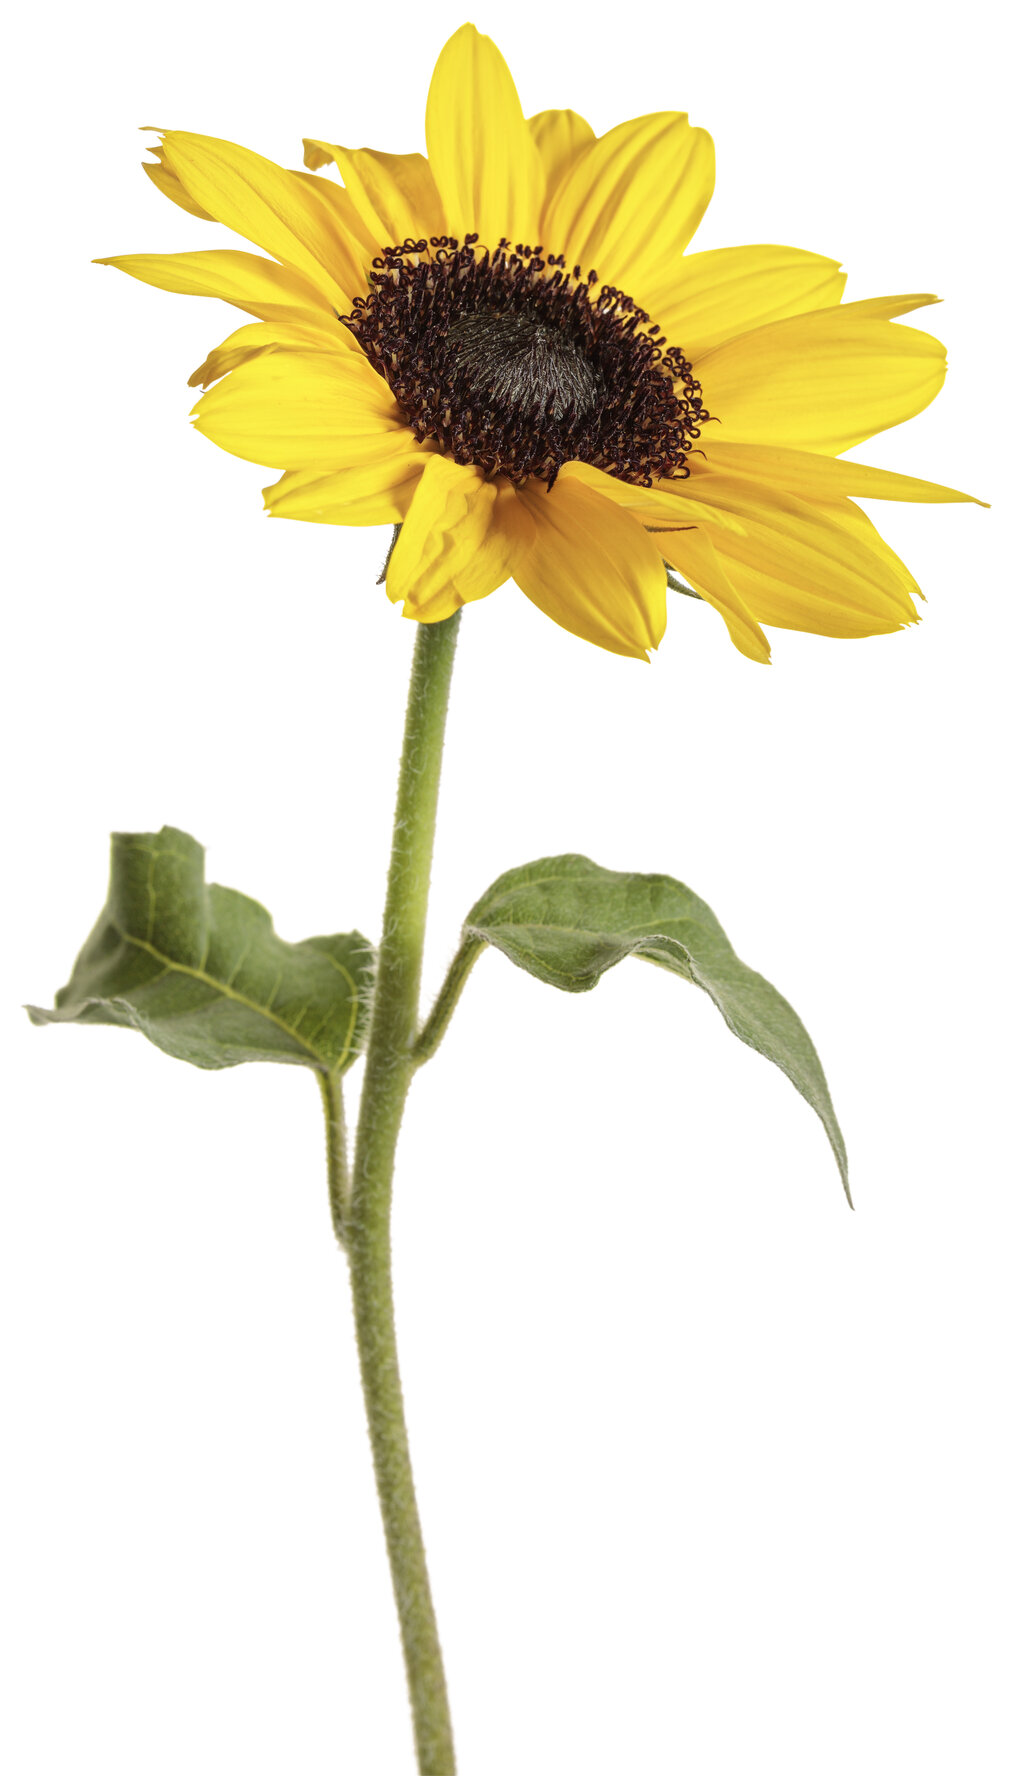 Suncredible® Yellow   Sunflower   Helianthus hybrid   Proven Winners